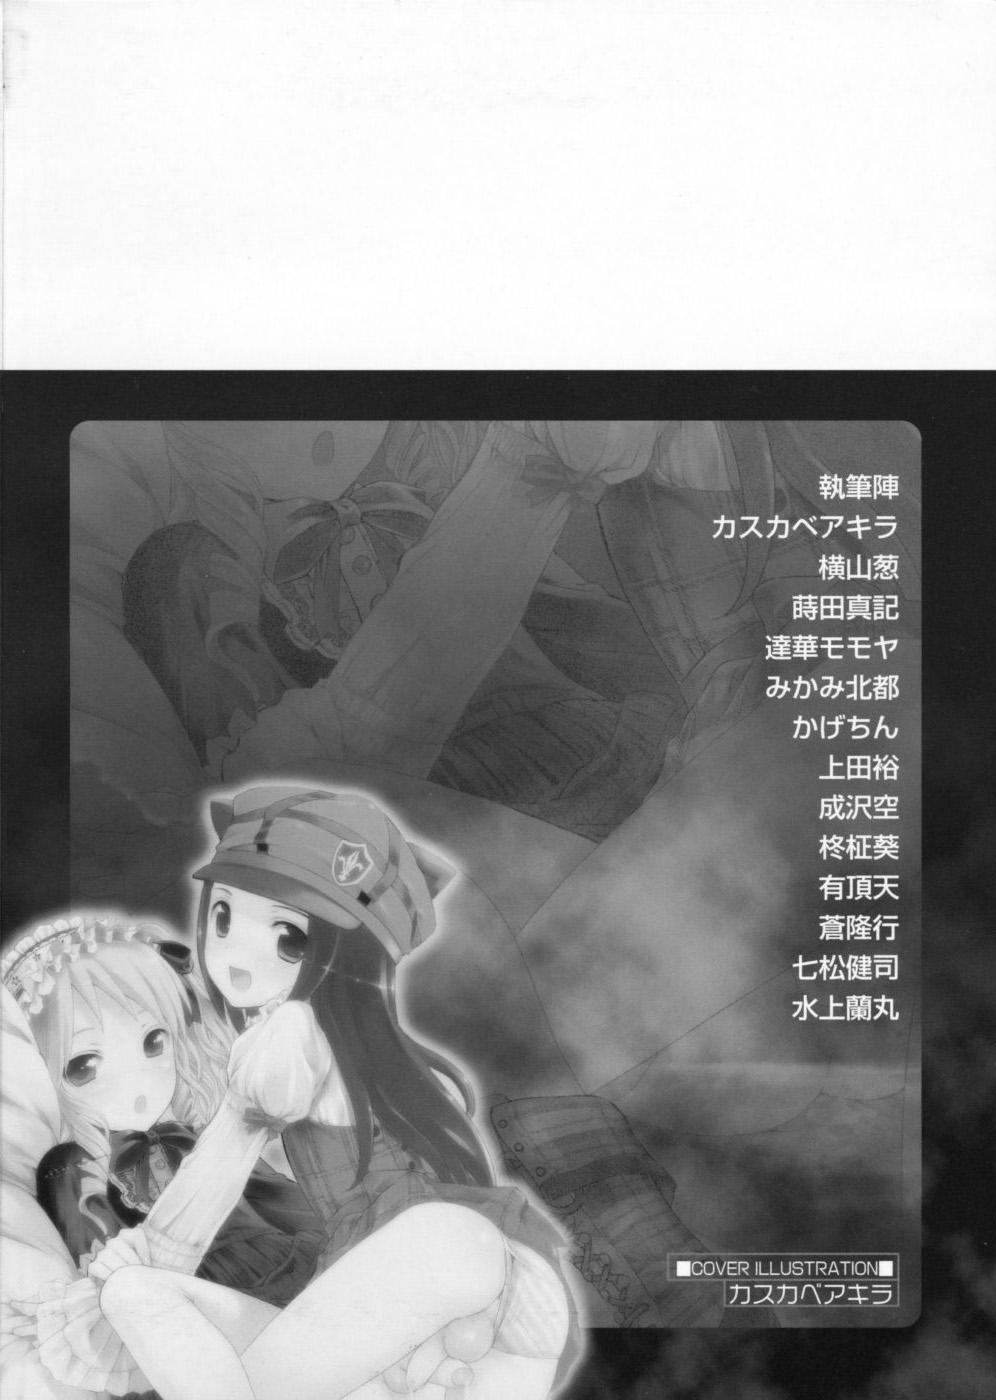 [Anthology] Shounen Shikou 19 - Josou World | Boy Fancier - Crossdressing World [English] 184